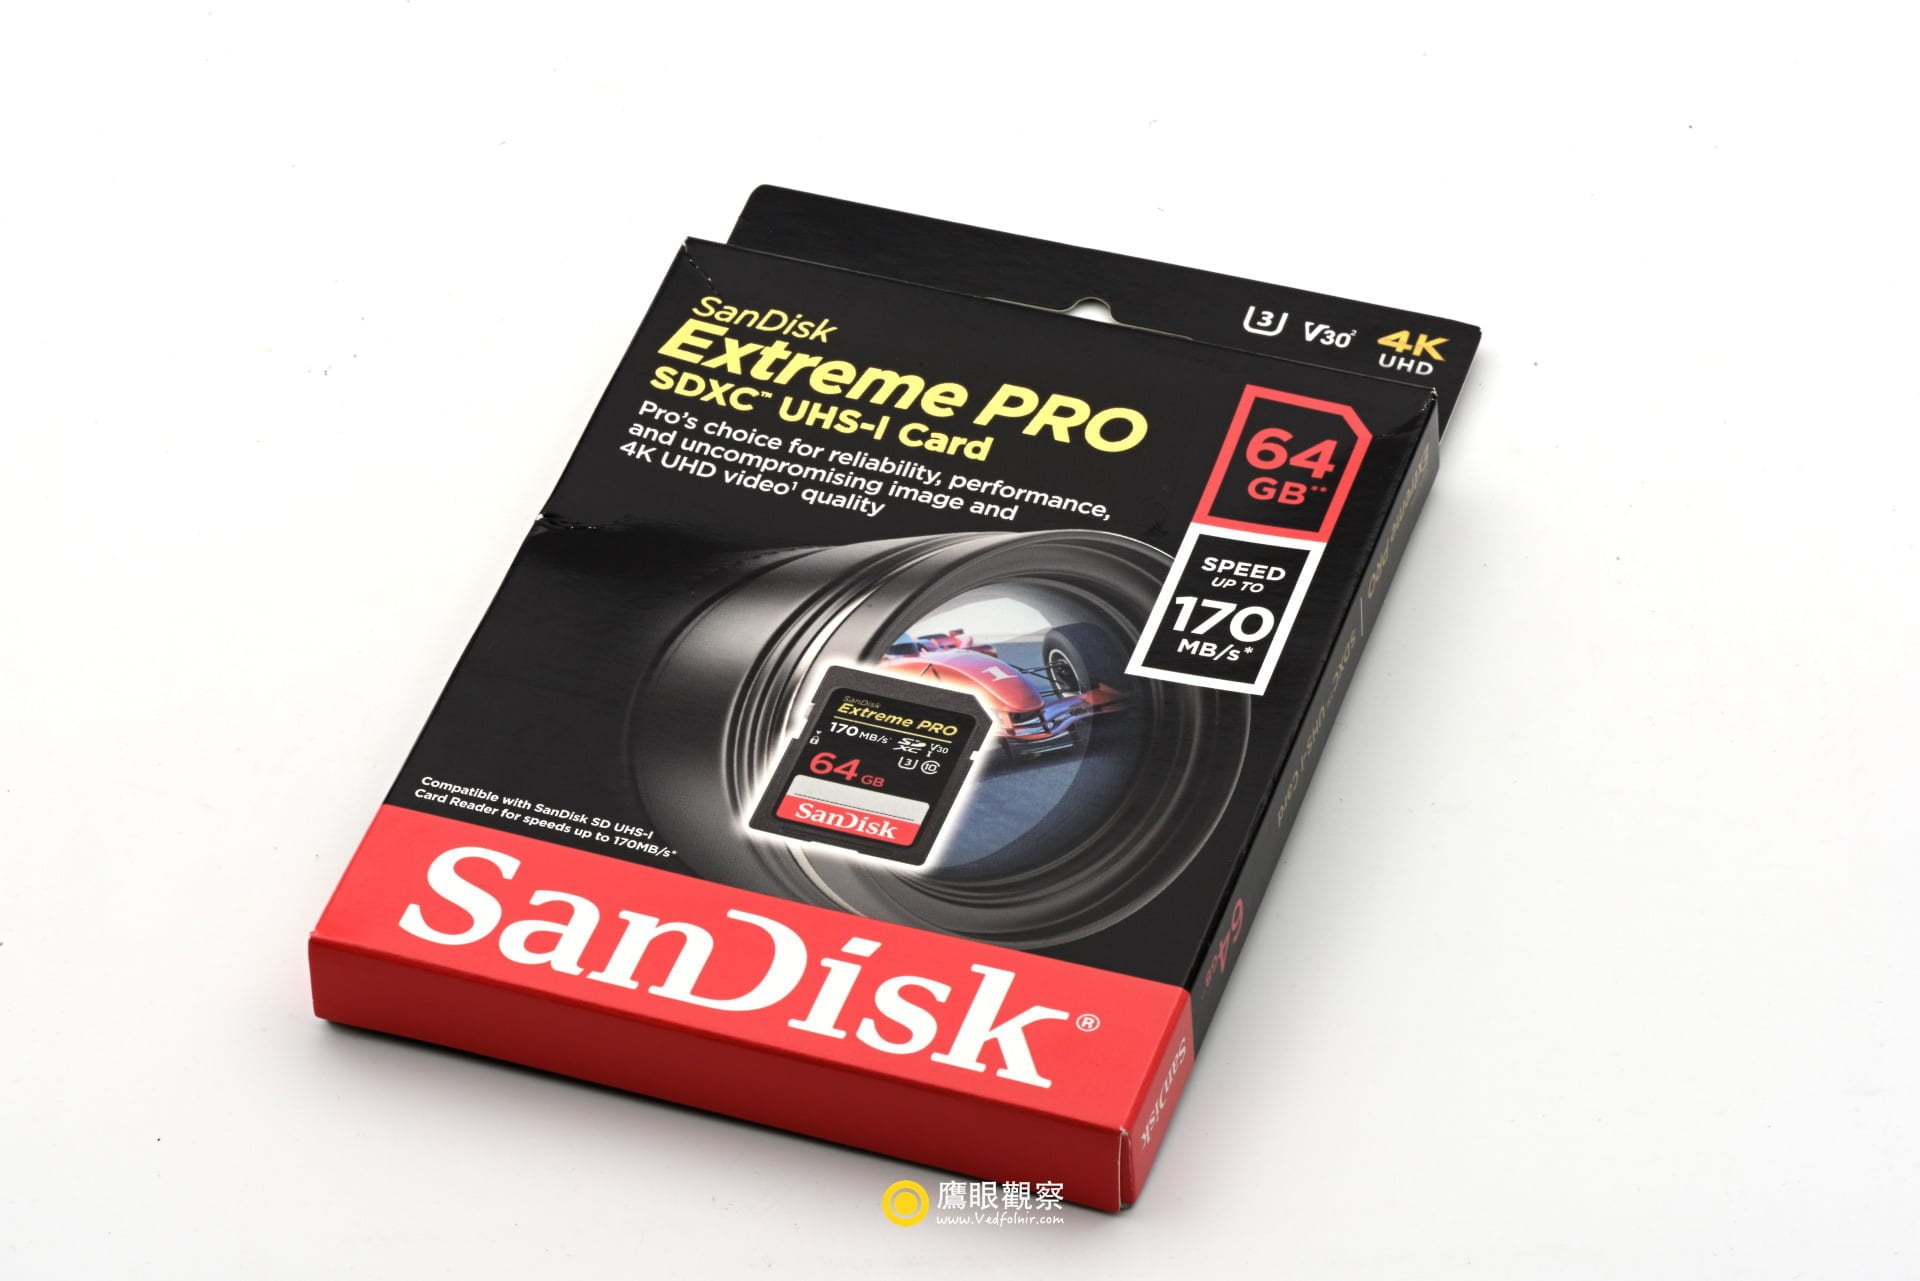 SanDisk Extreme PRO 64 GB 170MB/S 相機 SD 記憶卡購買心得與測試紀錄